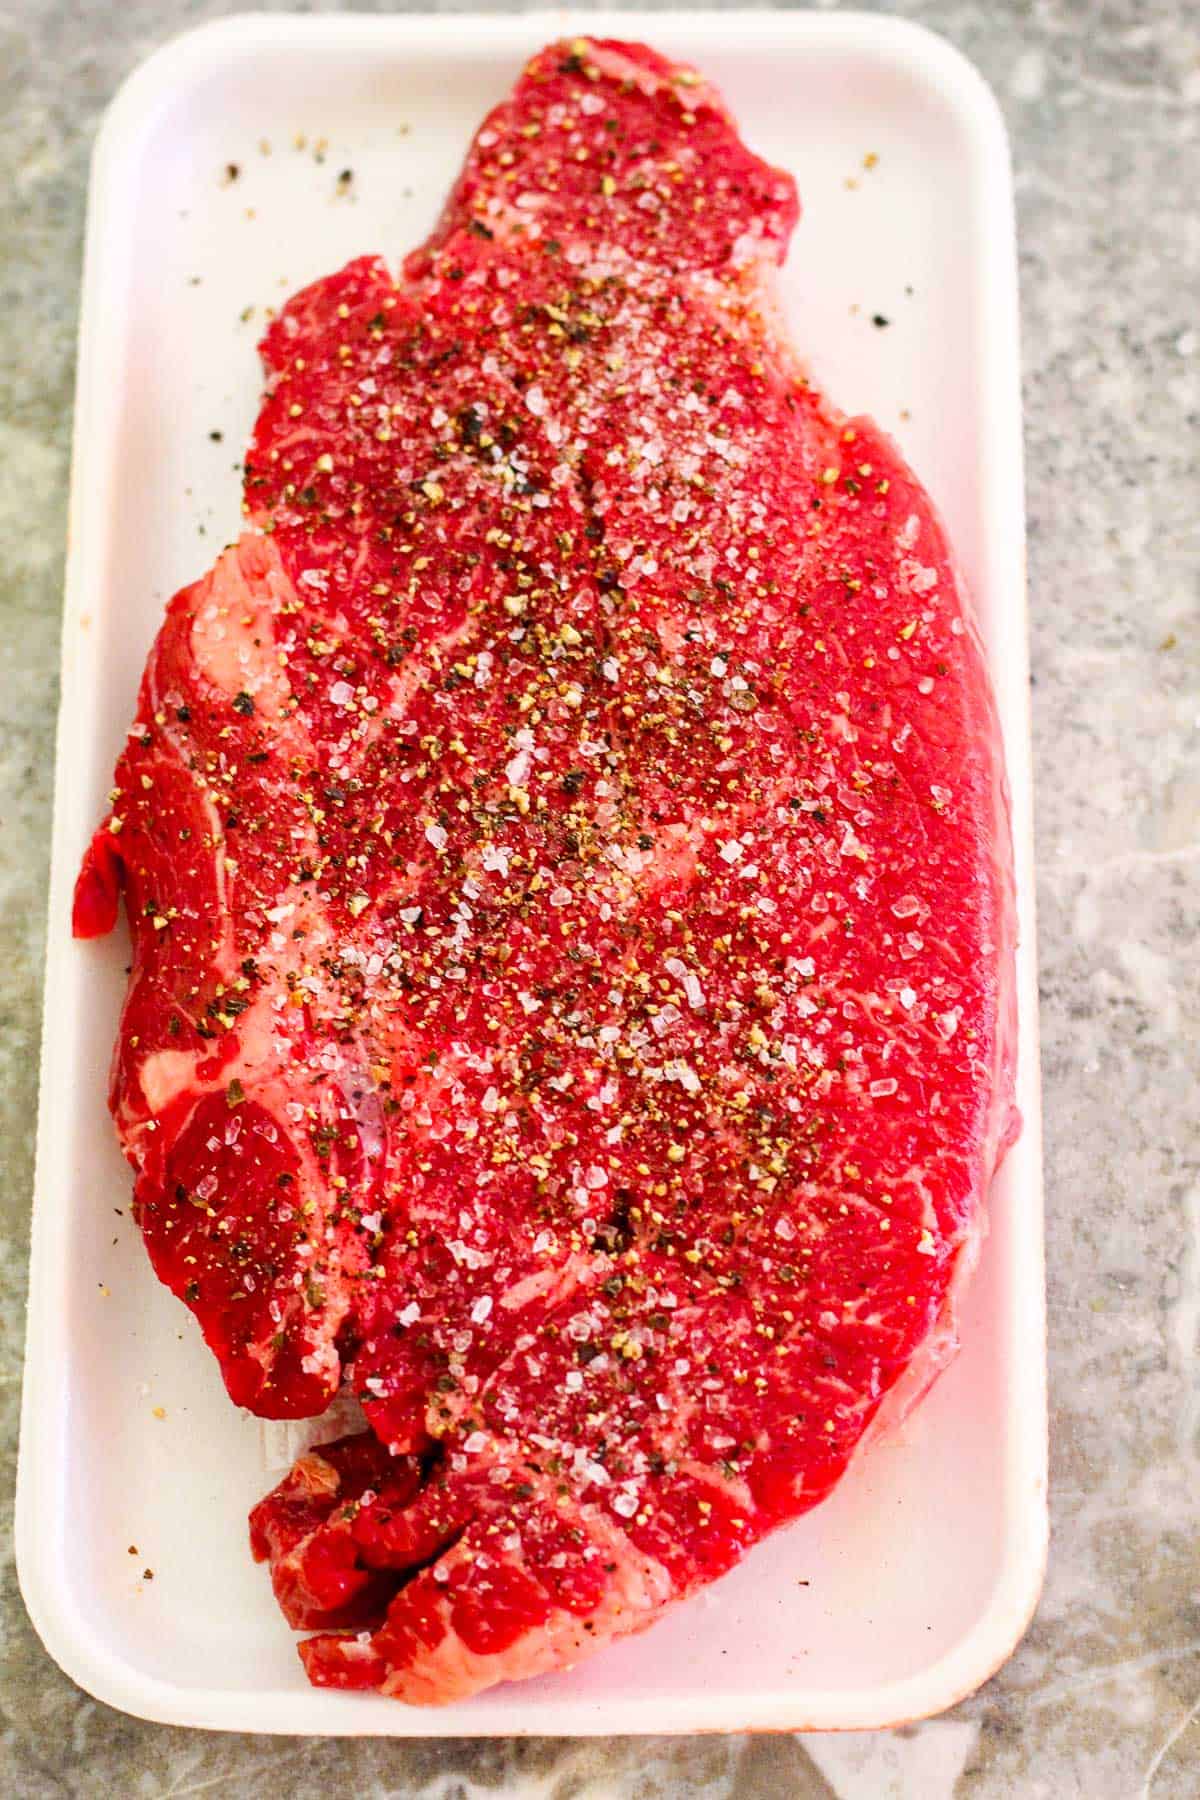 Chuck steak in package, now seasoned with coarse sea salt and pepper. Steak is still raw.